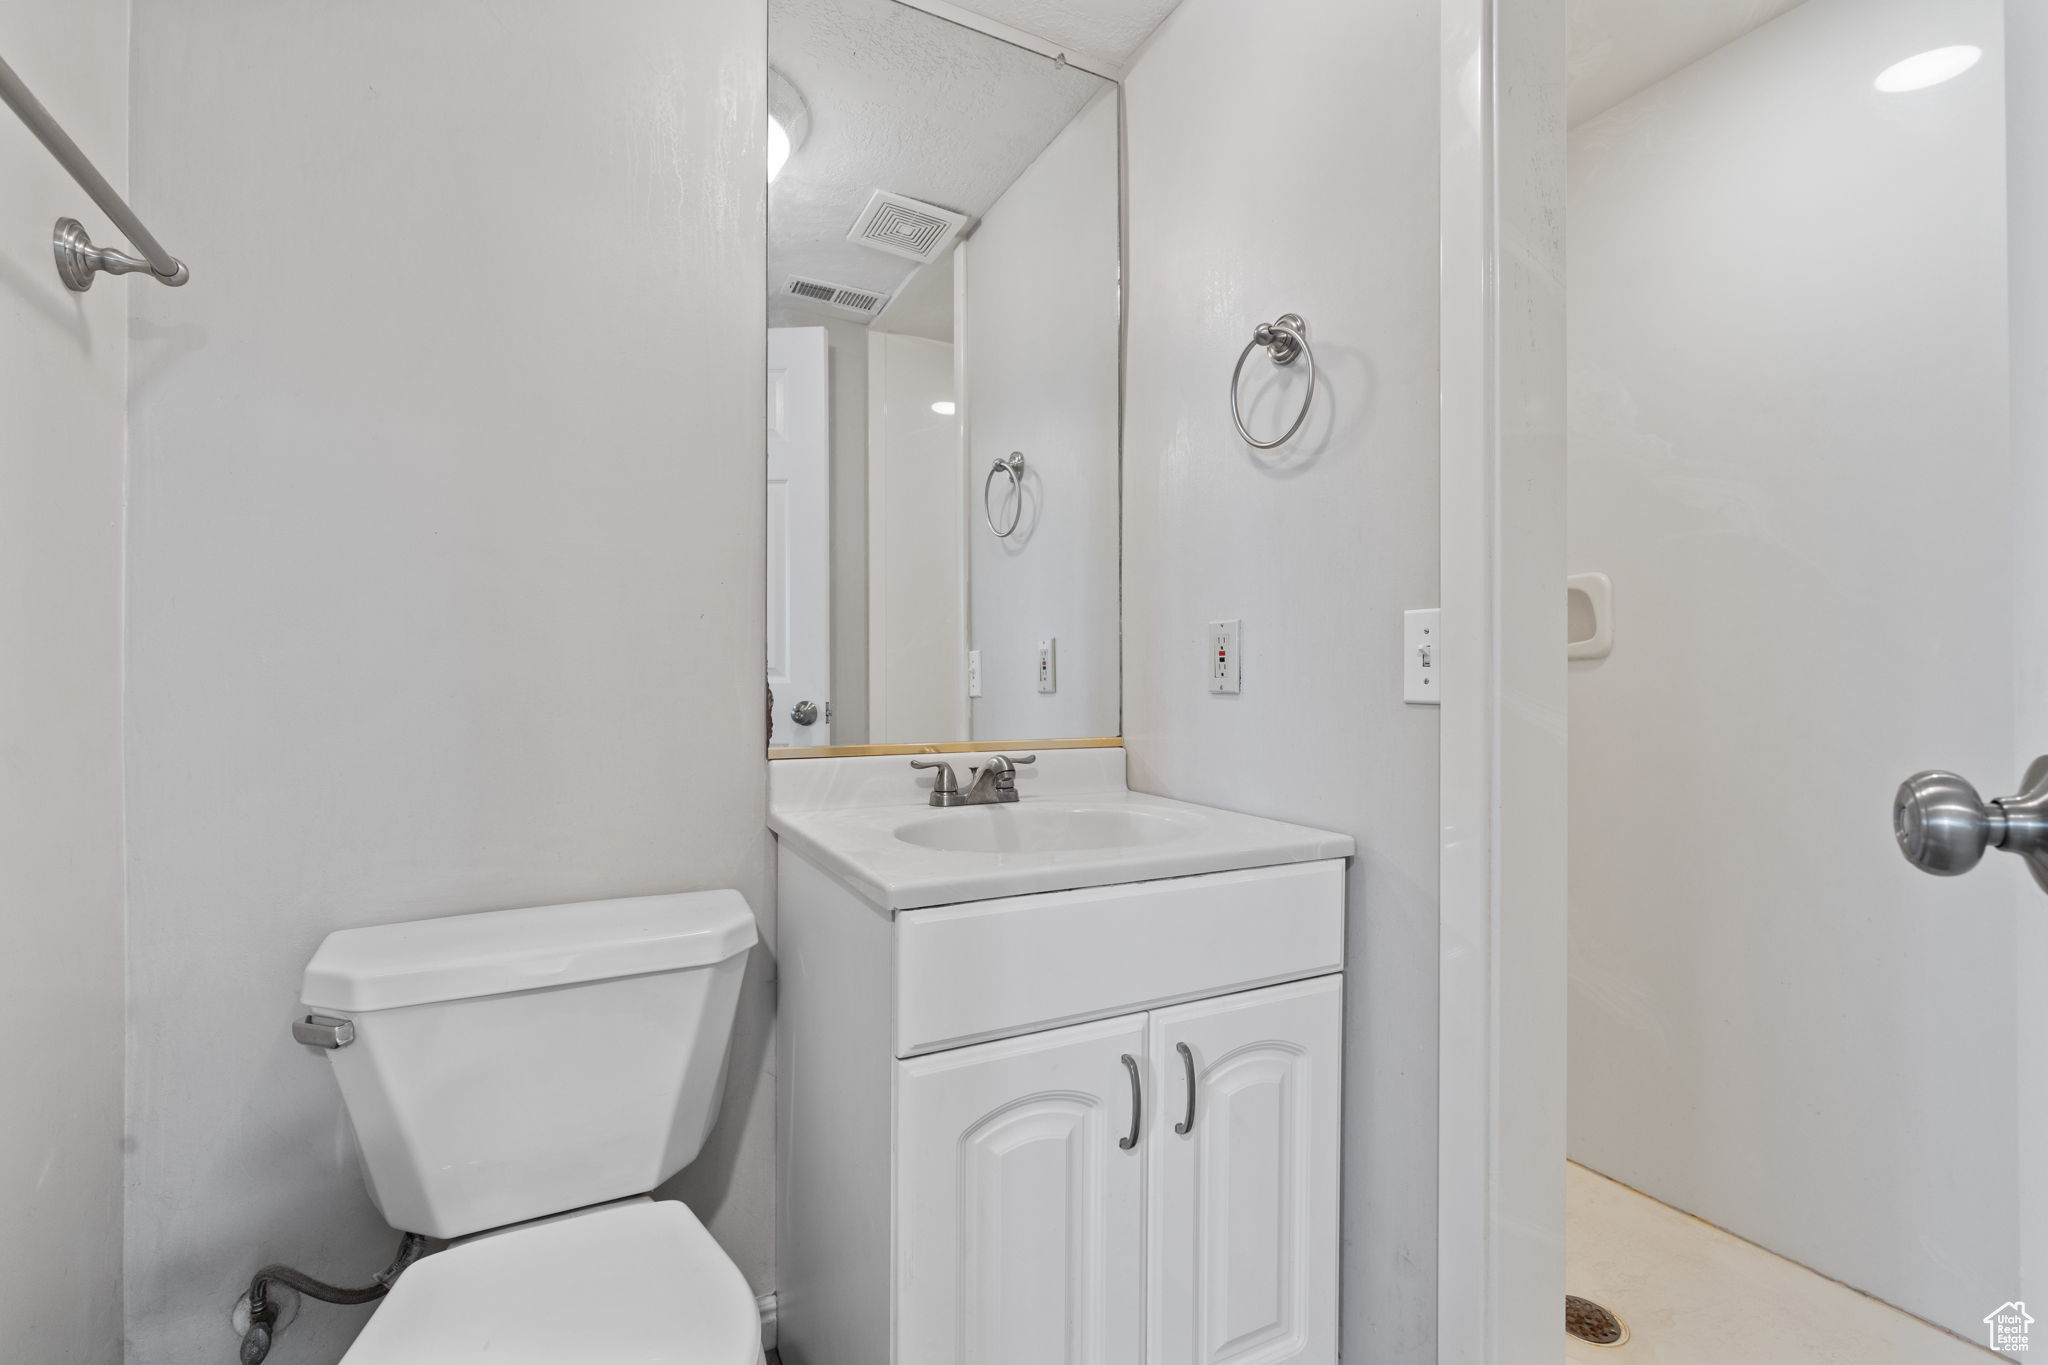 Bathroom featuring oversized vanity, toilet, and walk in shower